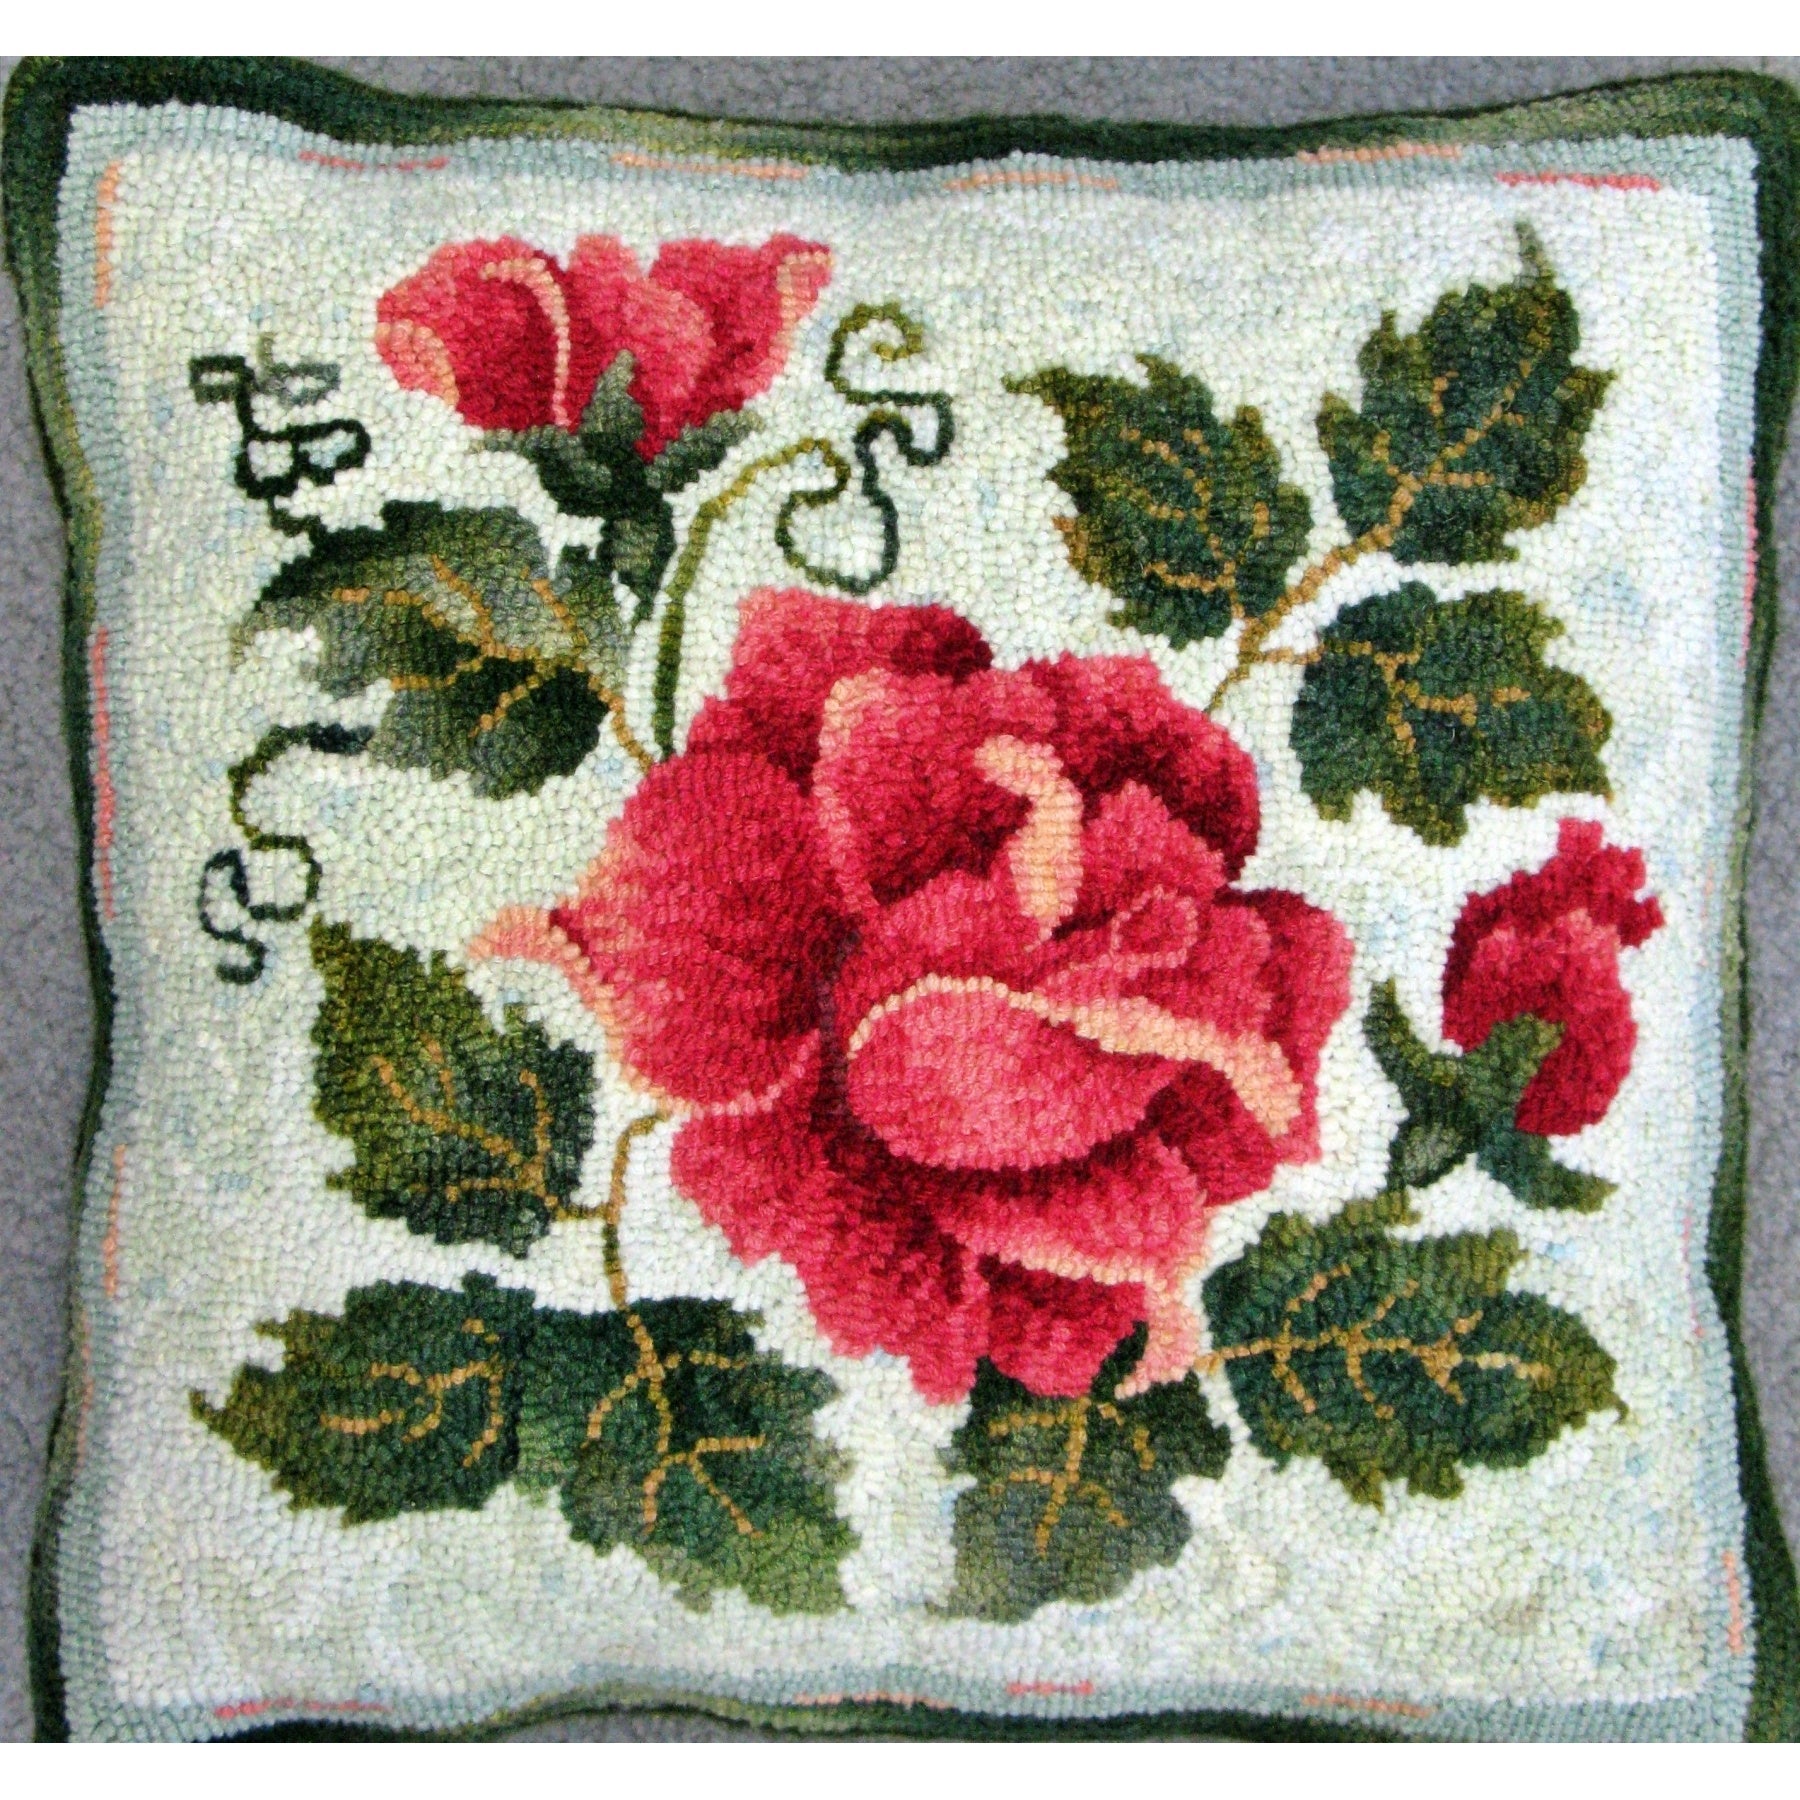 Marie, rug hooked by Linda Bell